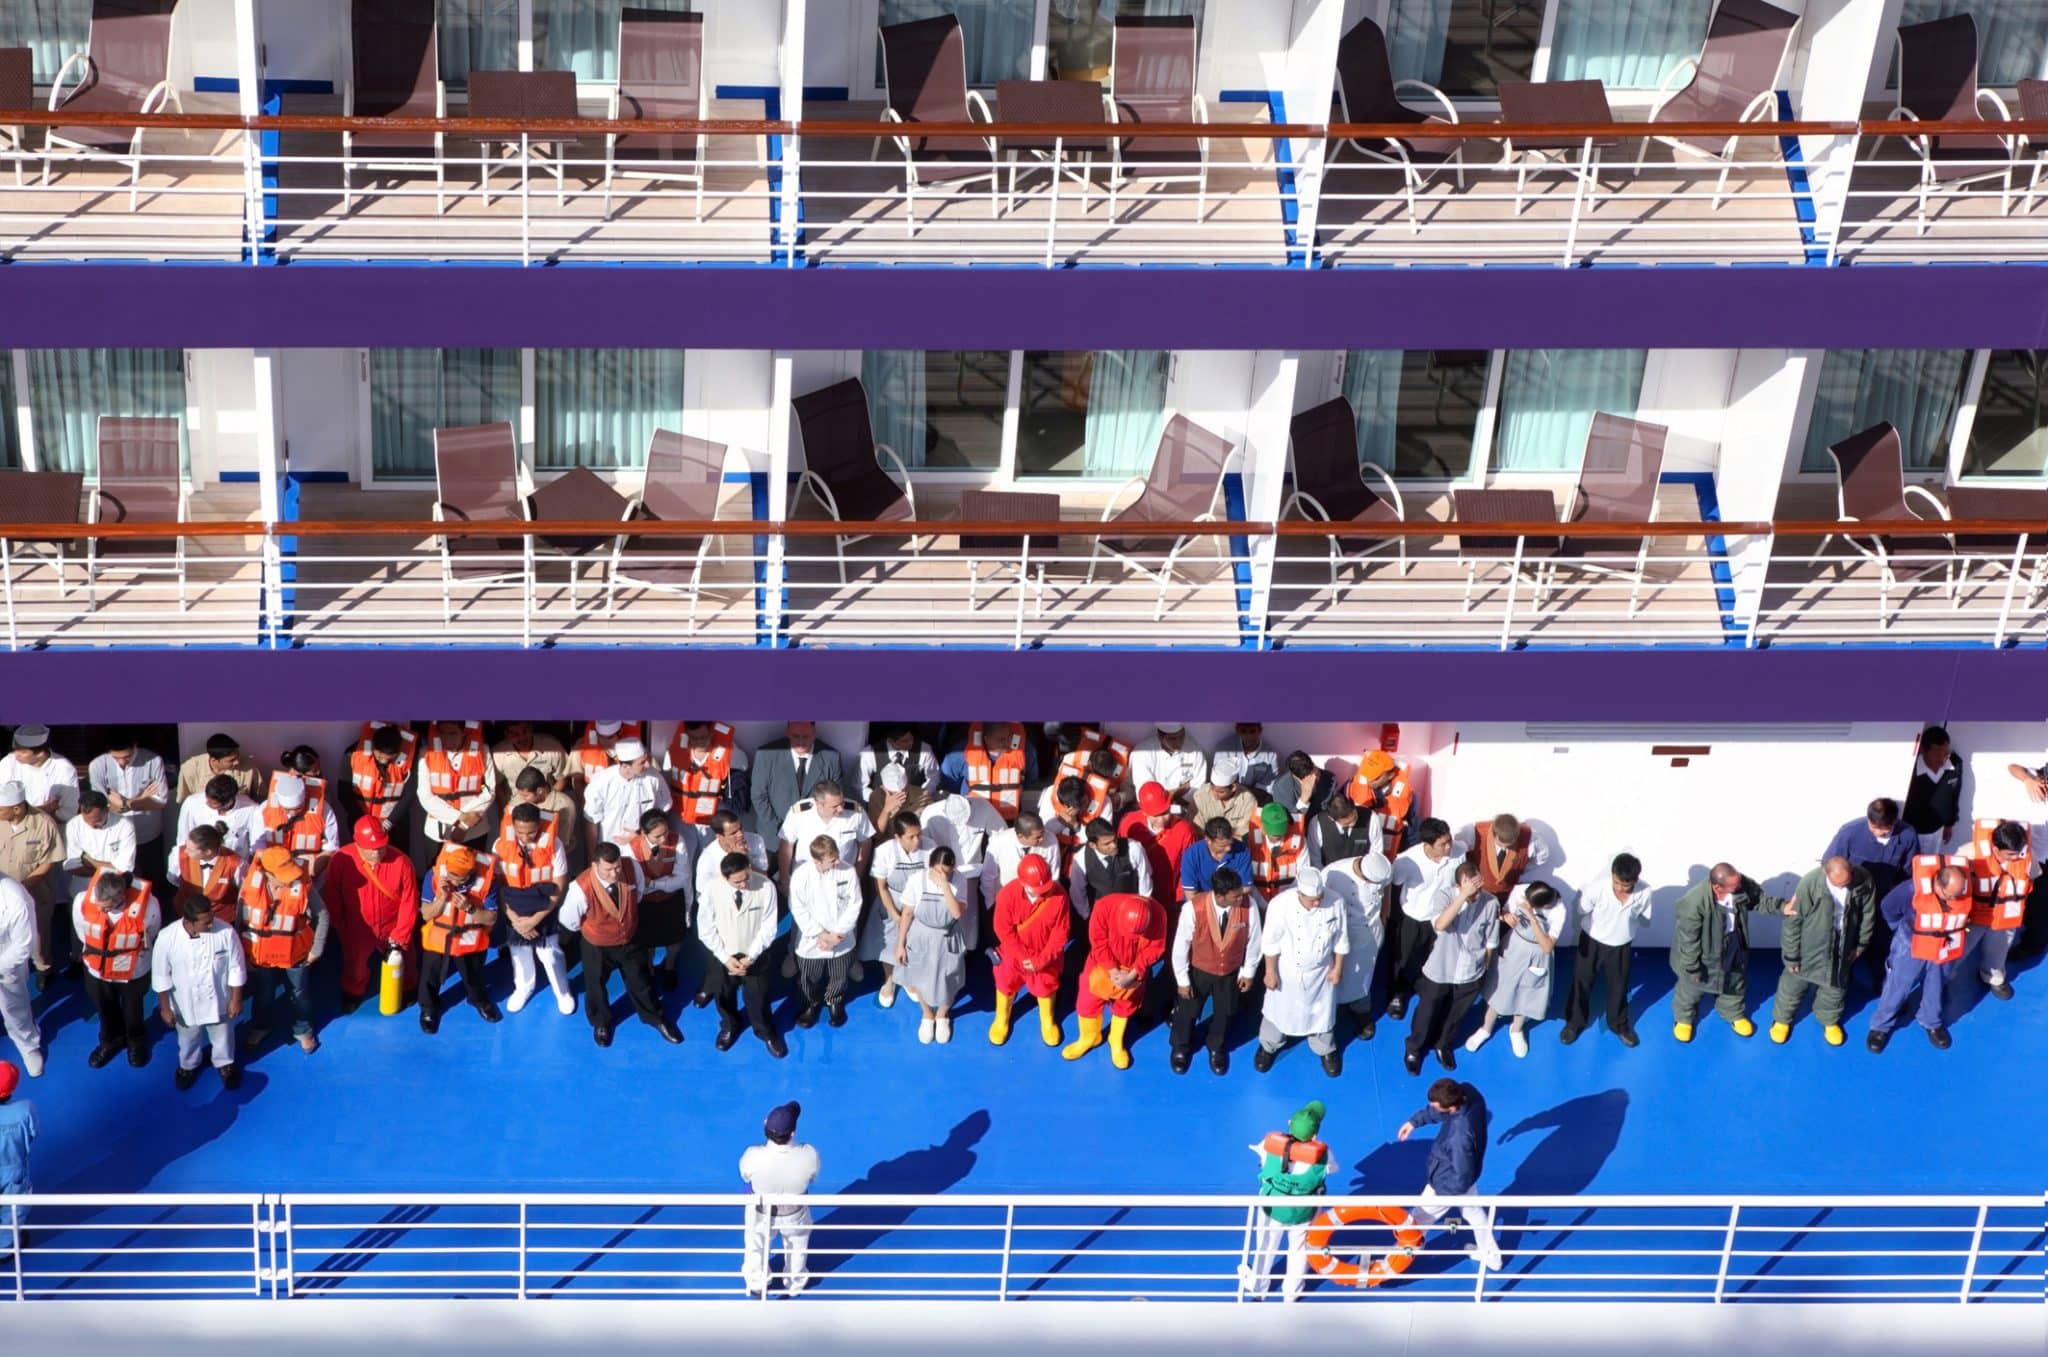 passenger to crew ratio on ship